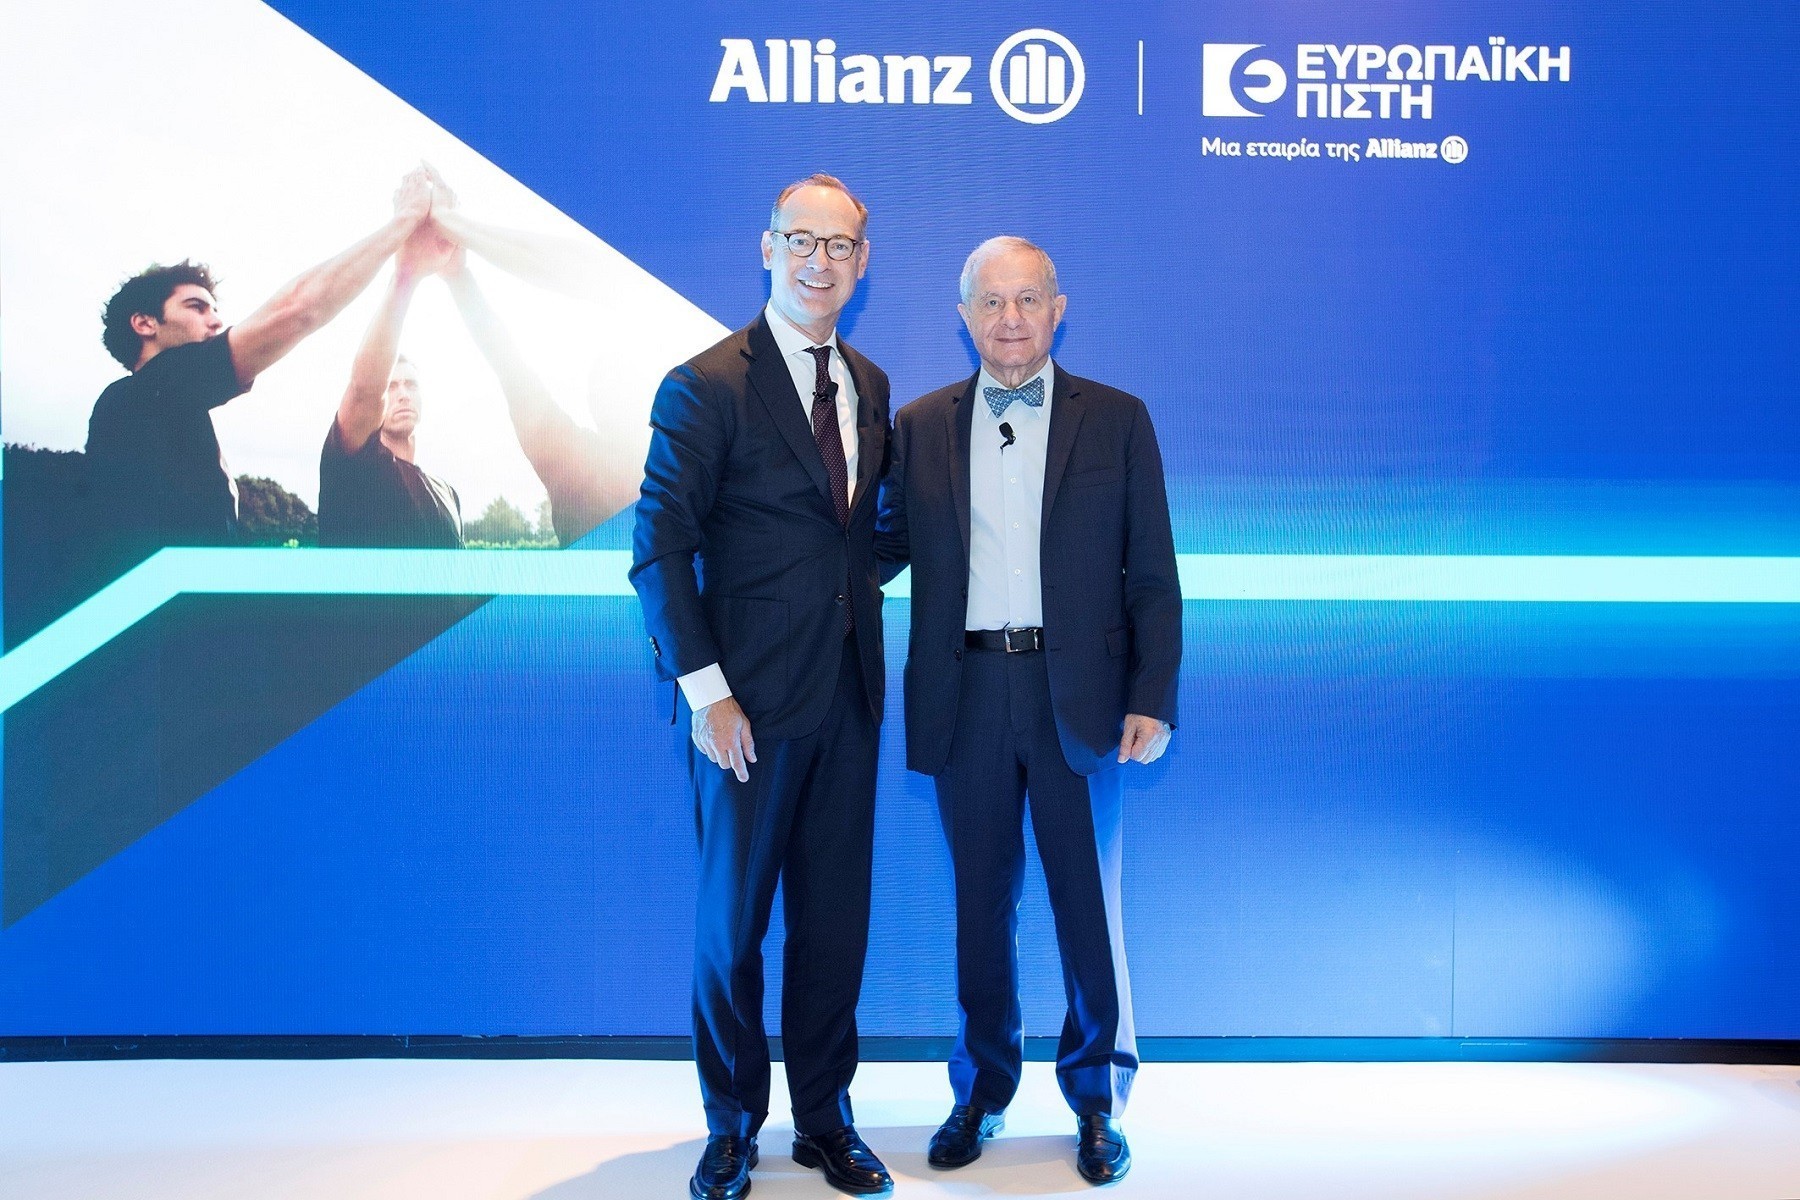 Oliver Bate: Το νέο σχήμα Allianz – Ευρωπαϊκή Πίστη θα κατακτήσει την πρώτη θέση στην Ελλάδα